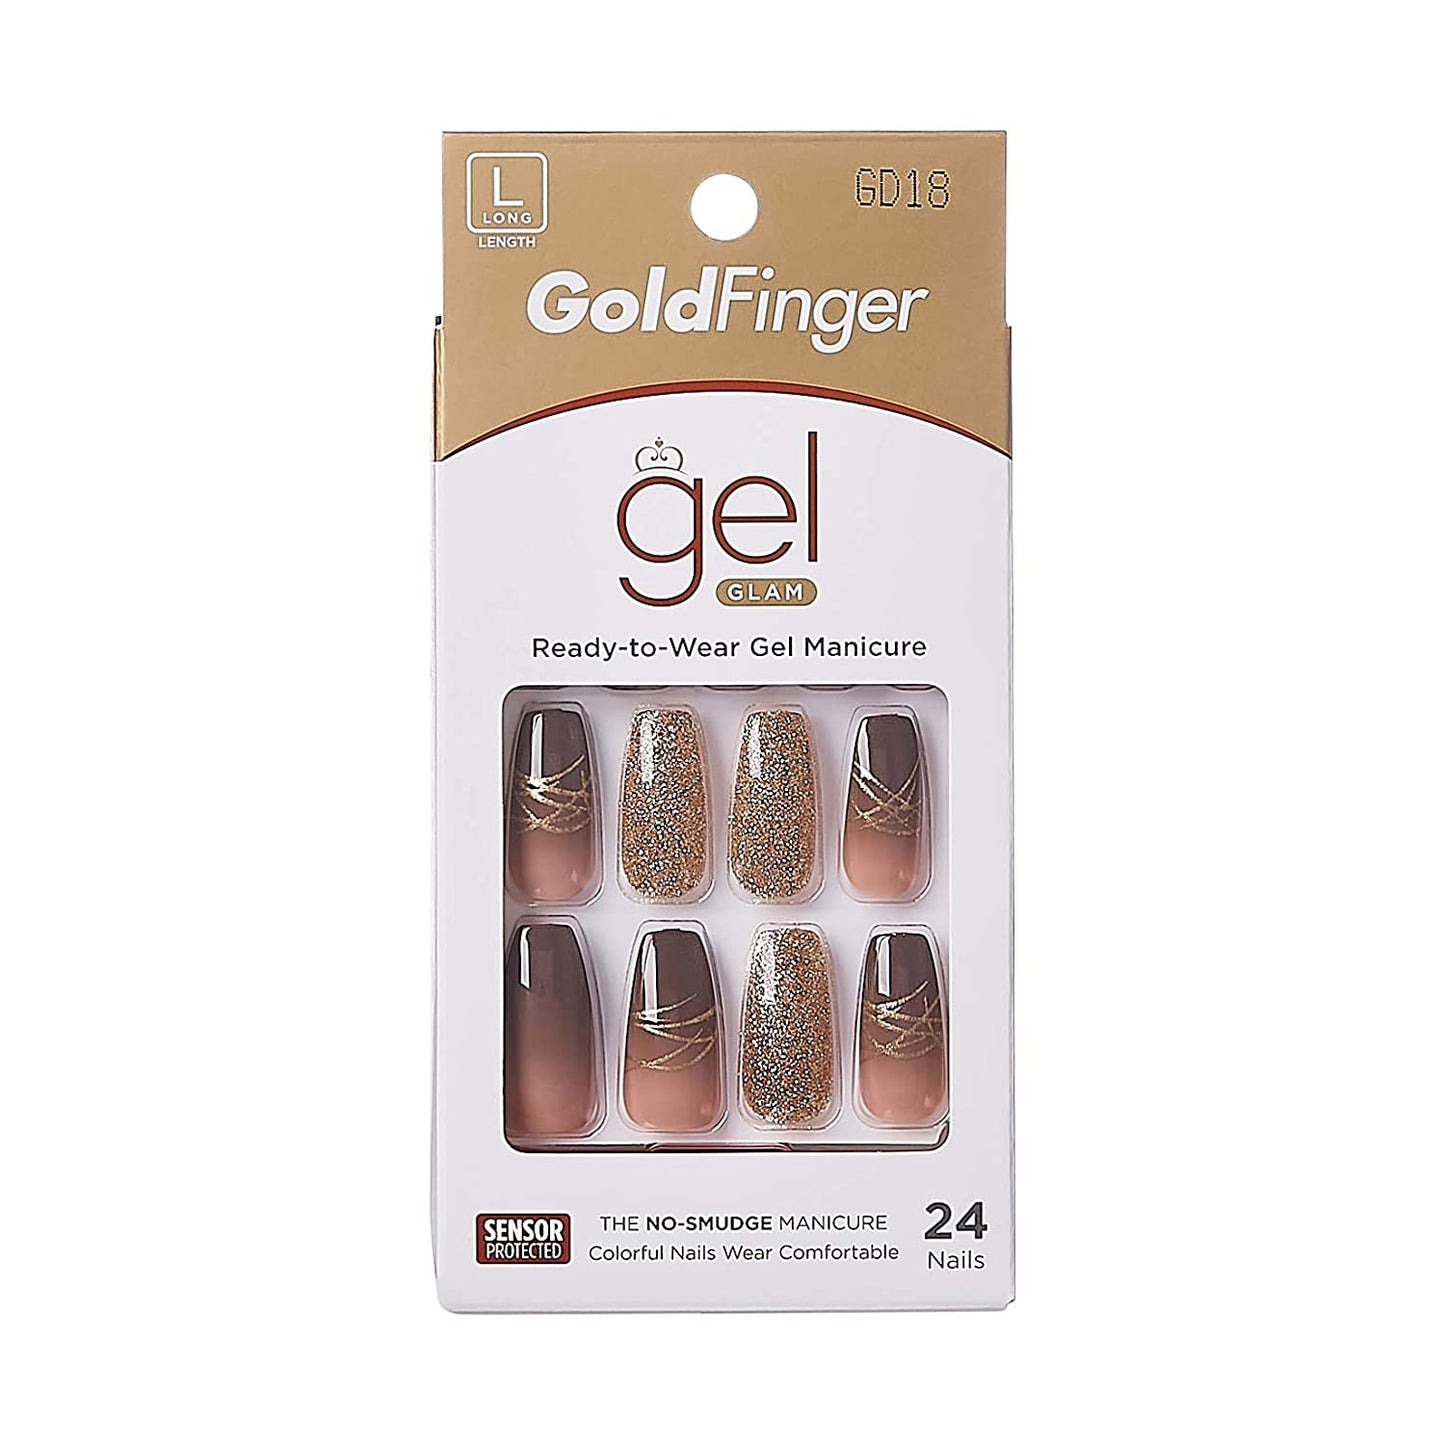 KISS GoldFinger Gel Glam Manicure Nails GD18